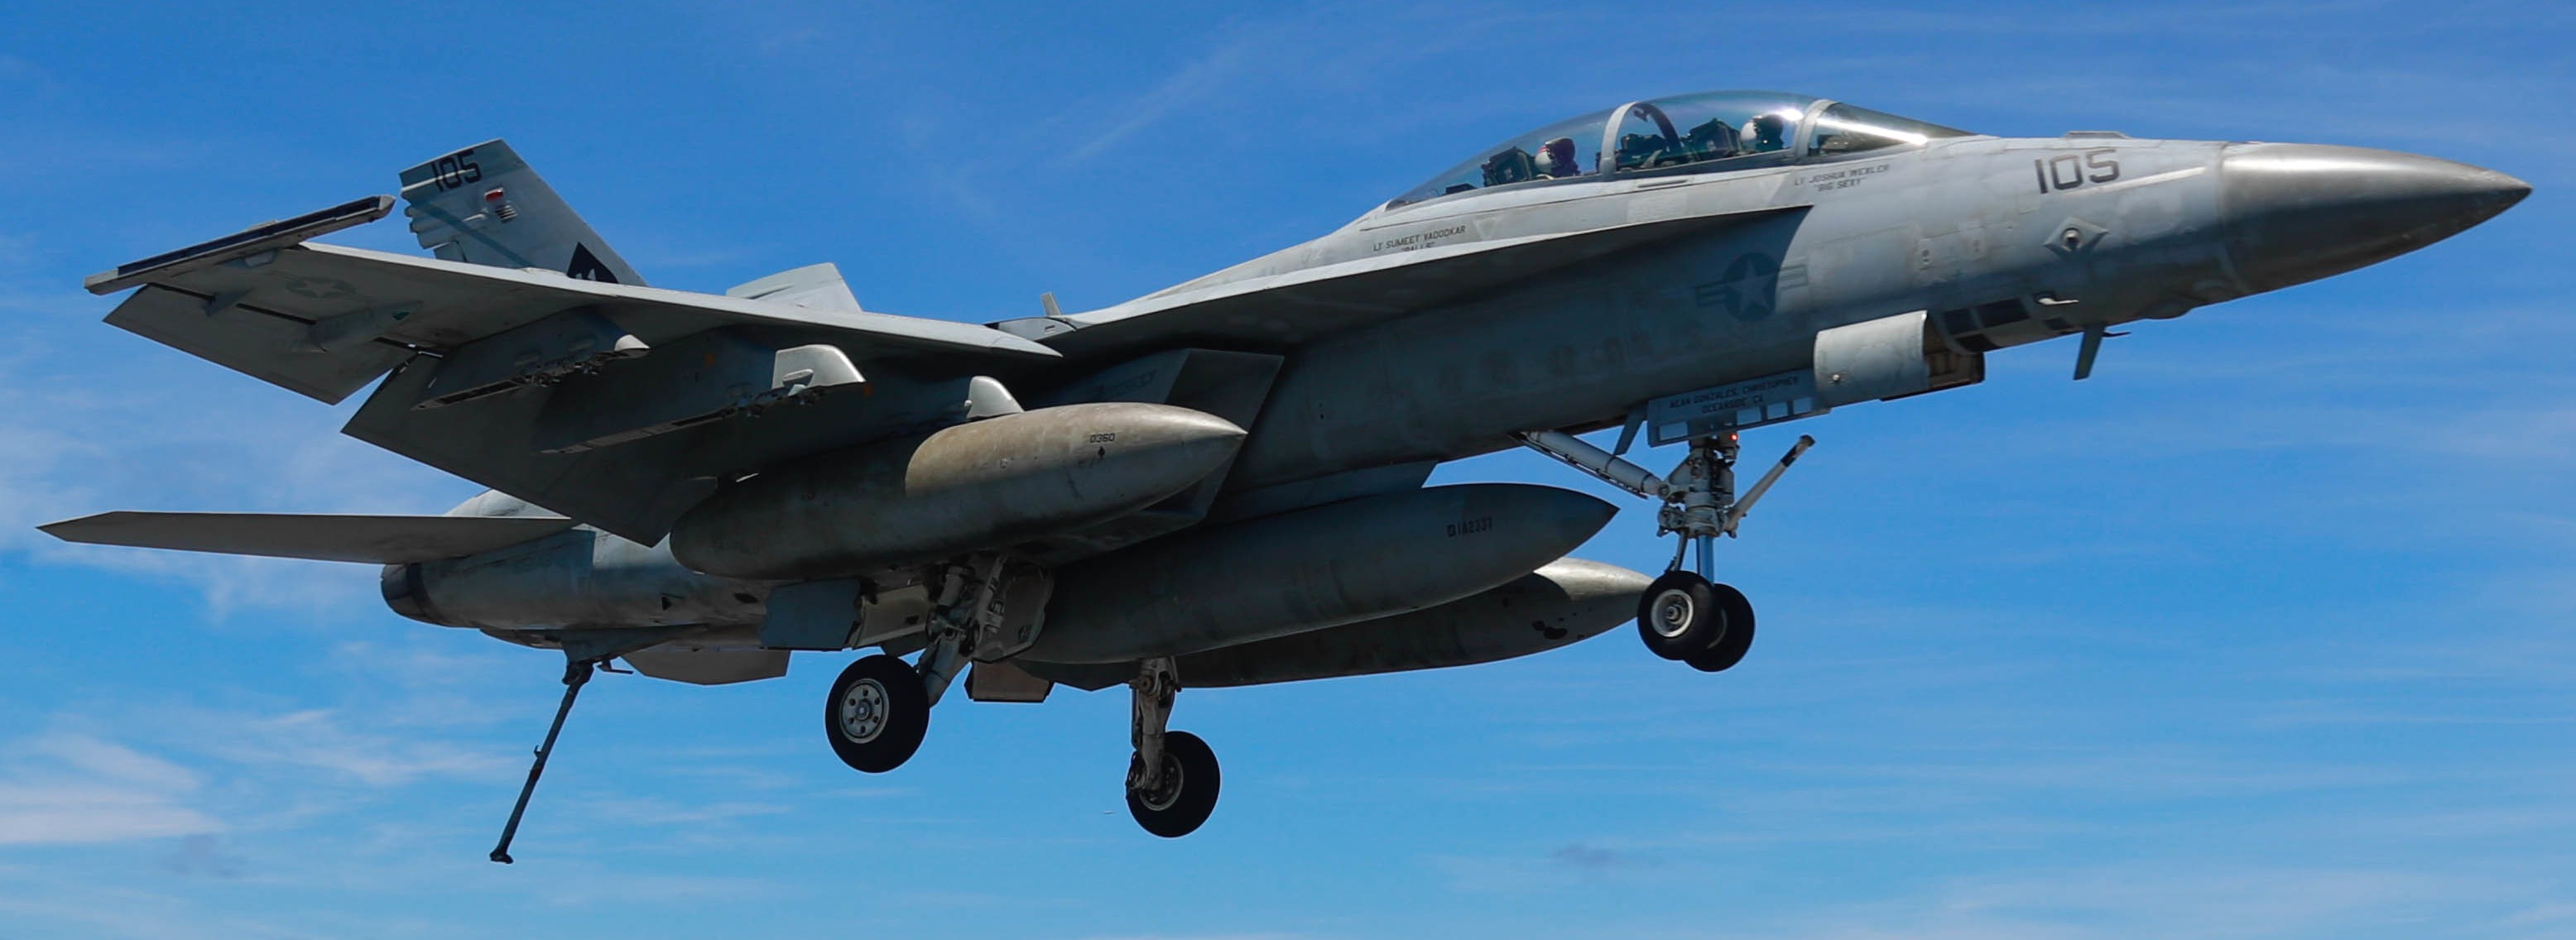 vfa-41 black aces strike fighter squadron f/a-18f super hornet cvw-9 cvn-72 uss abraham lincoln us navy 97